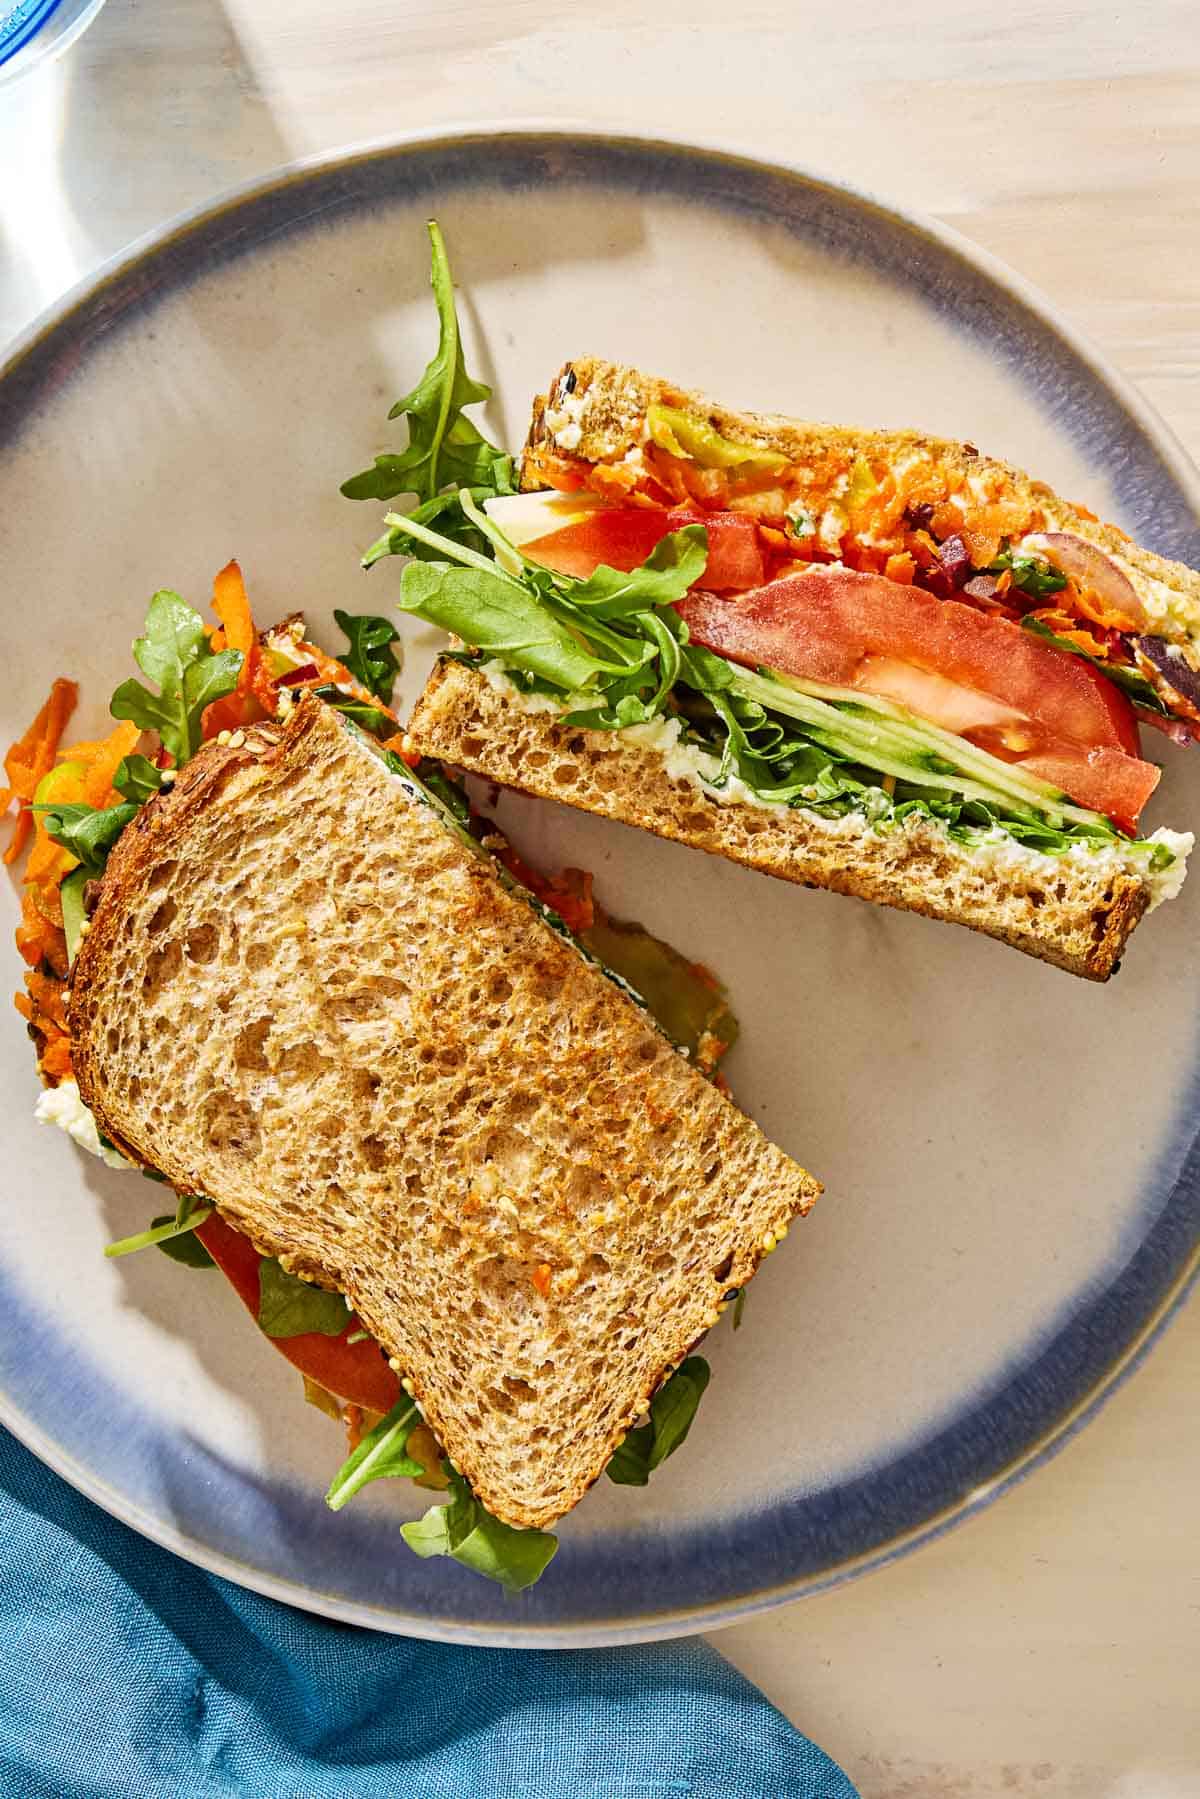 A veggie sandwich cut in half on a plate next to a cloth napkin.